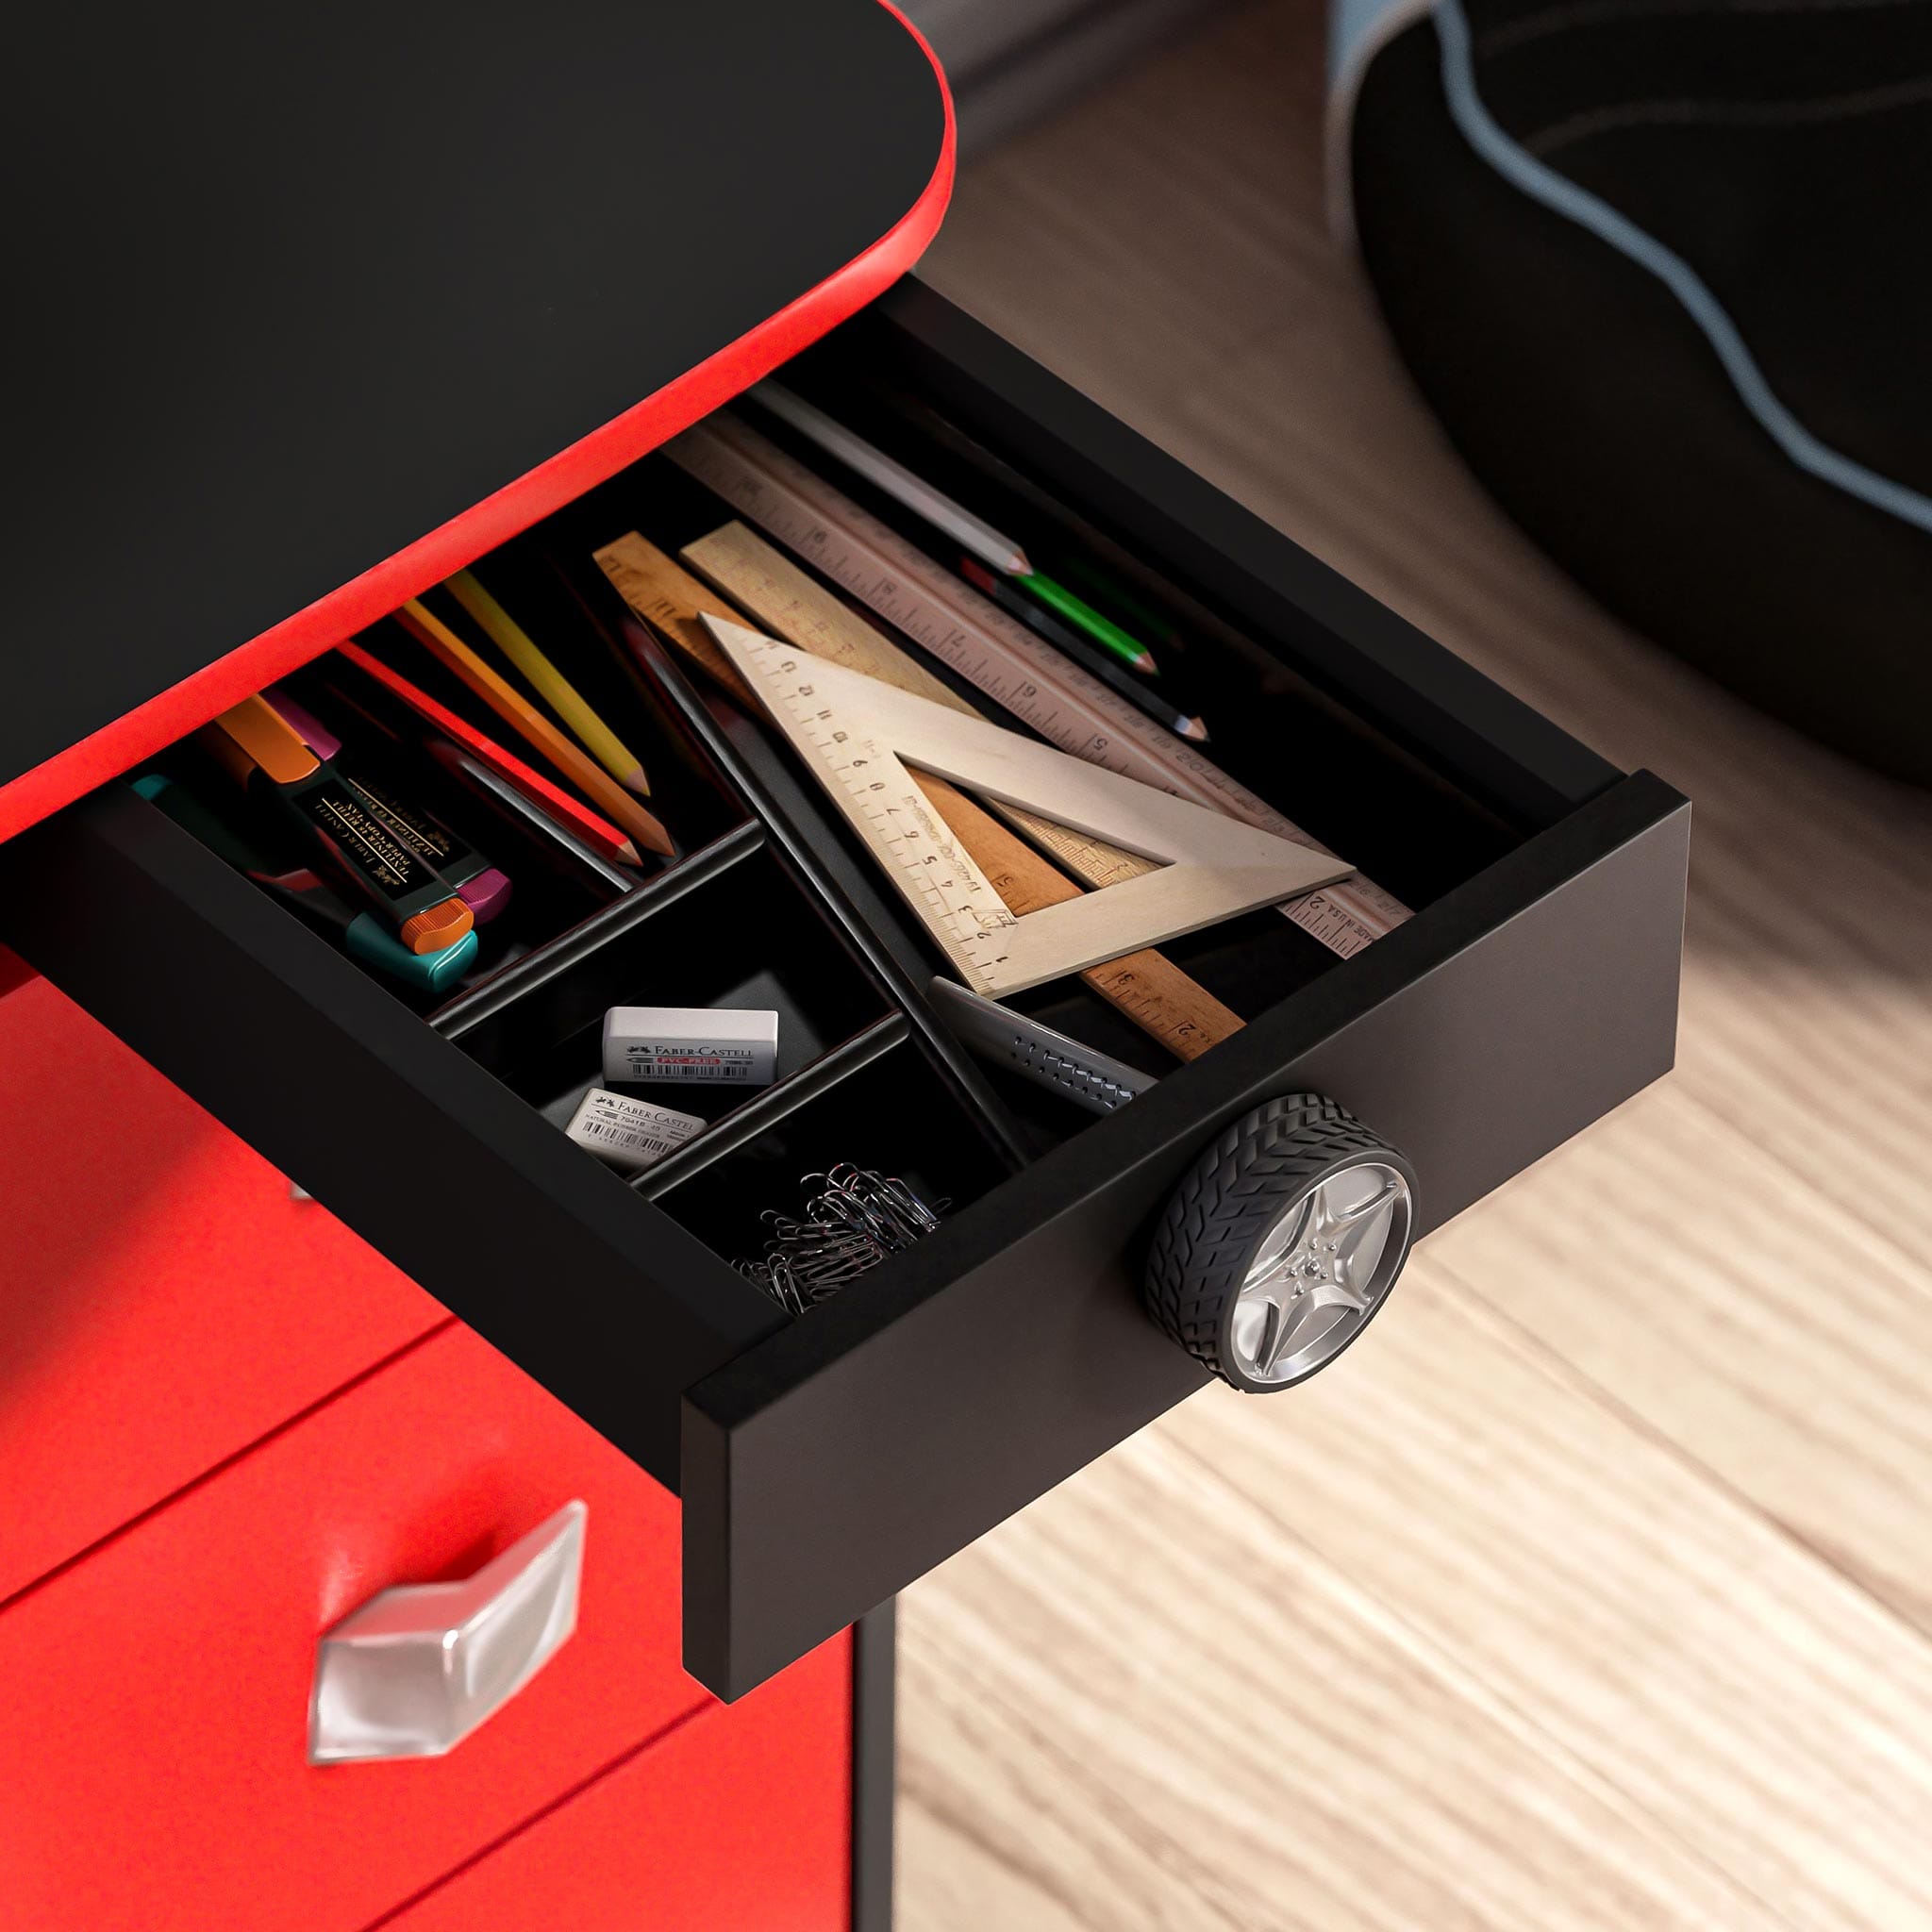 GTS EV Study Desk & Hutch with Cabinet, Car Dashboard Design